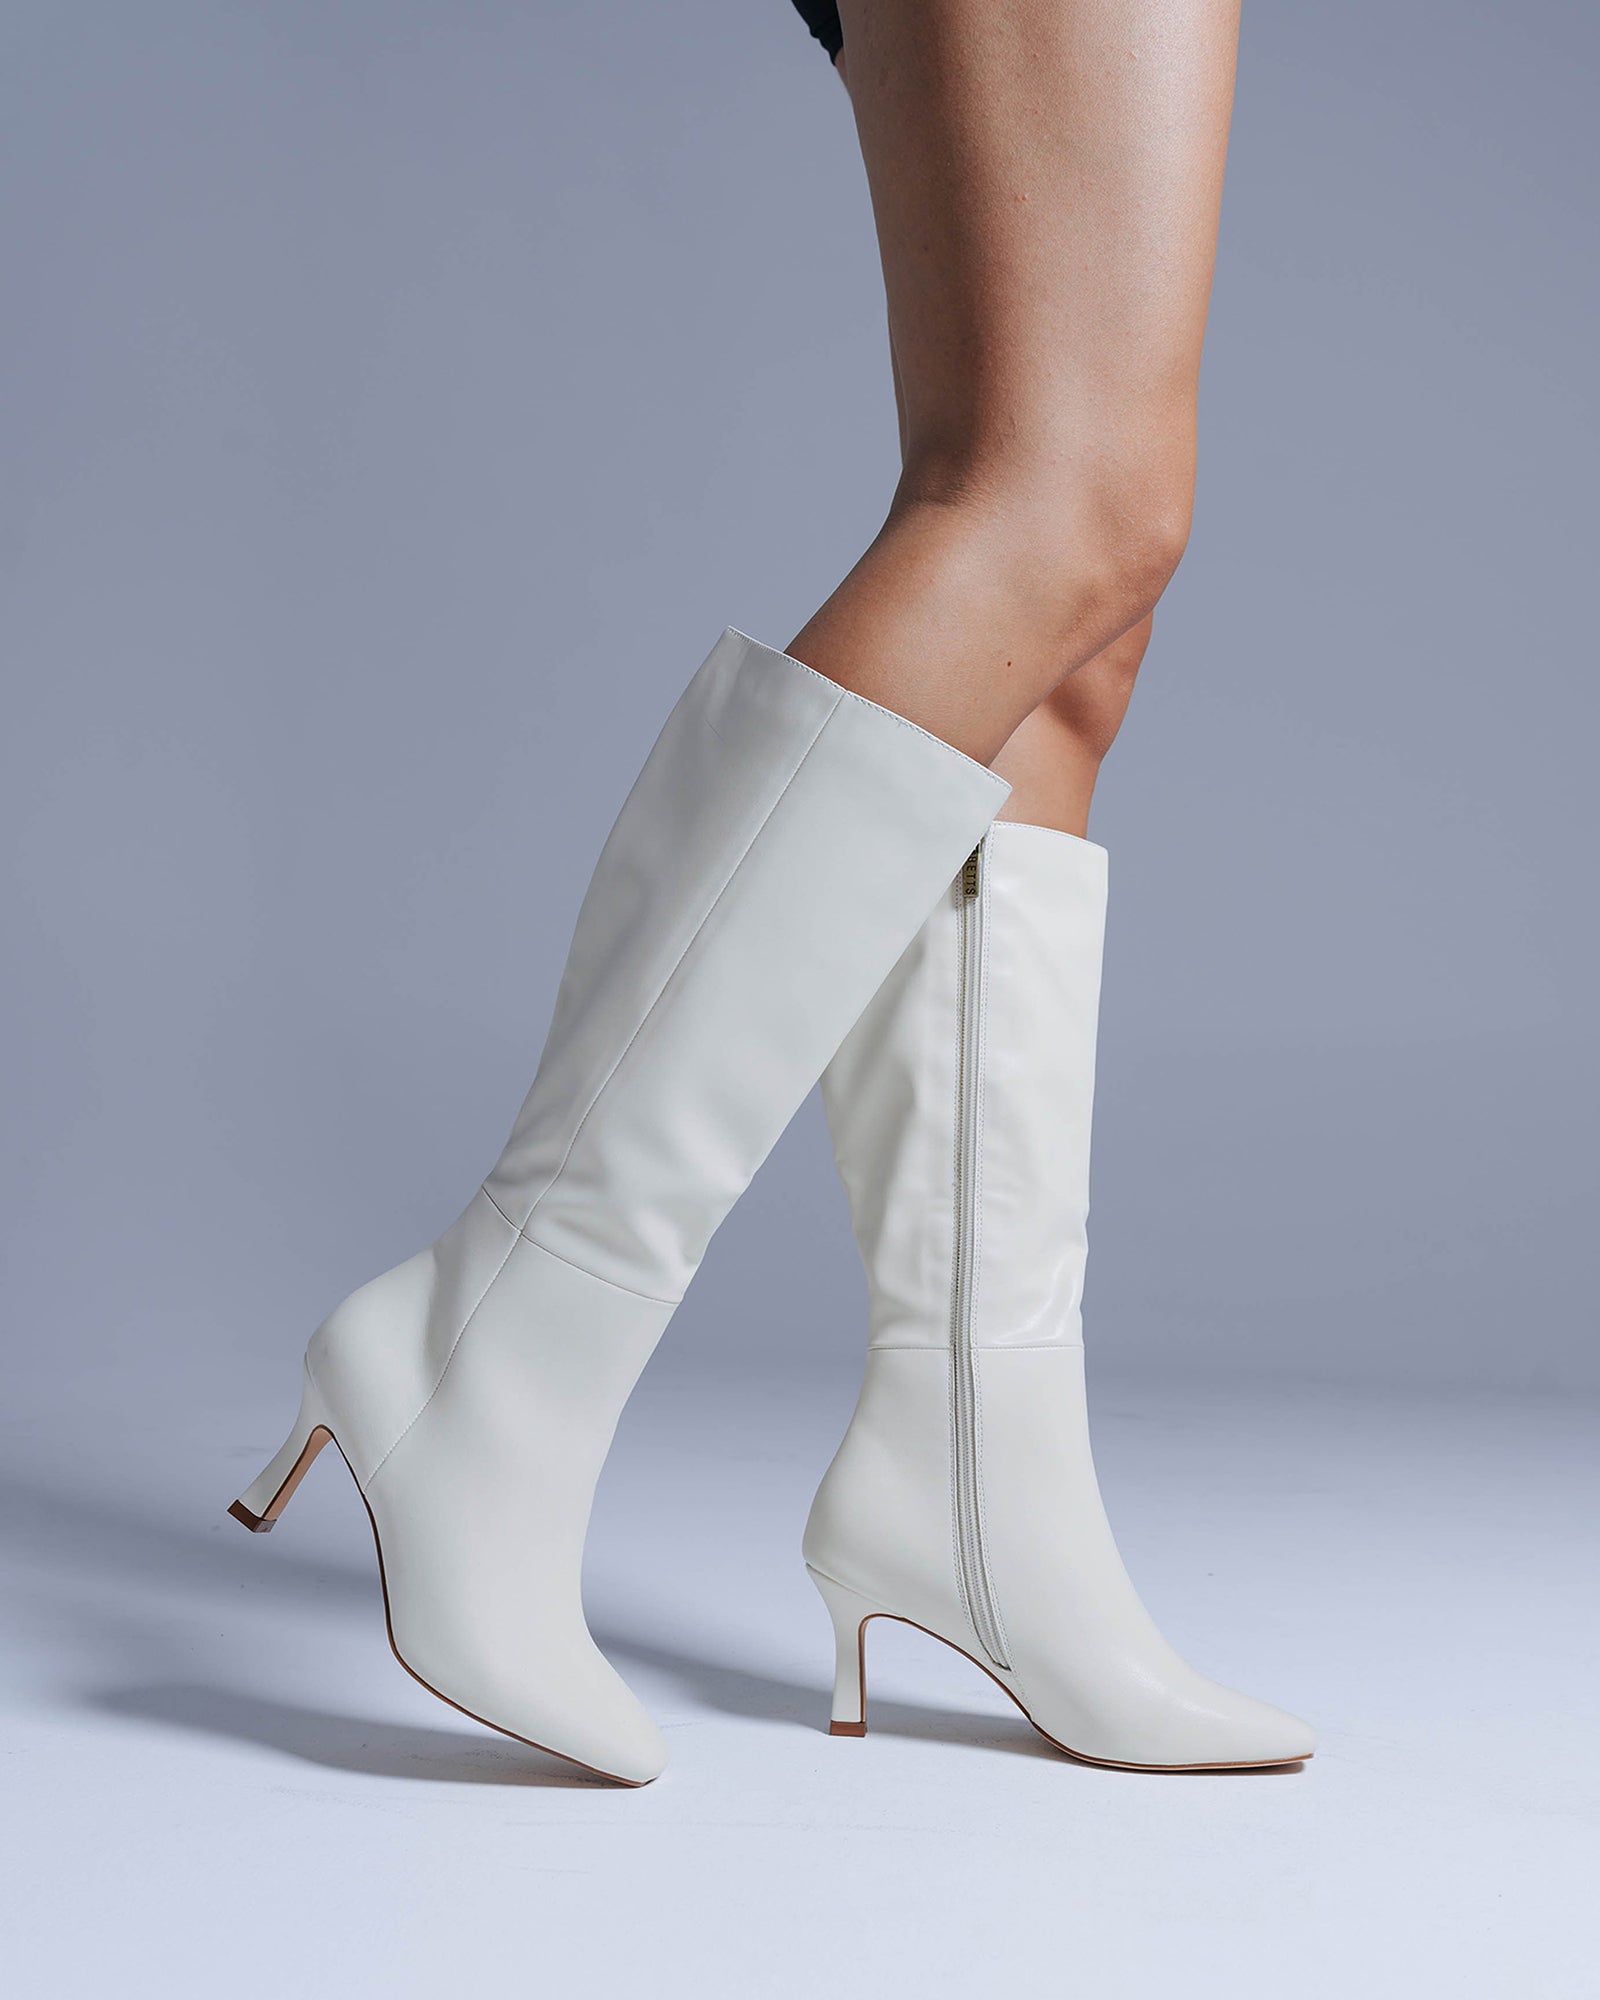 Rita Ora Wears Controversial Thong Boots in NYC | Photos | POPSUGAR Fashion